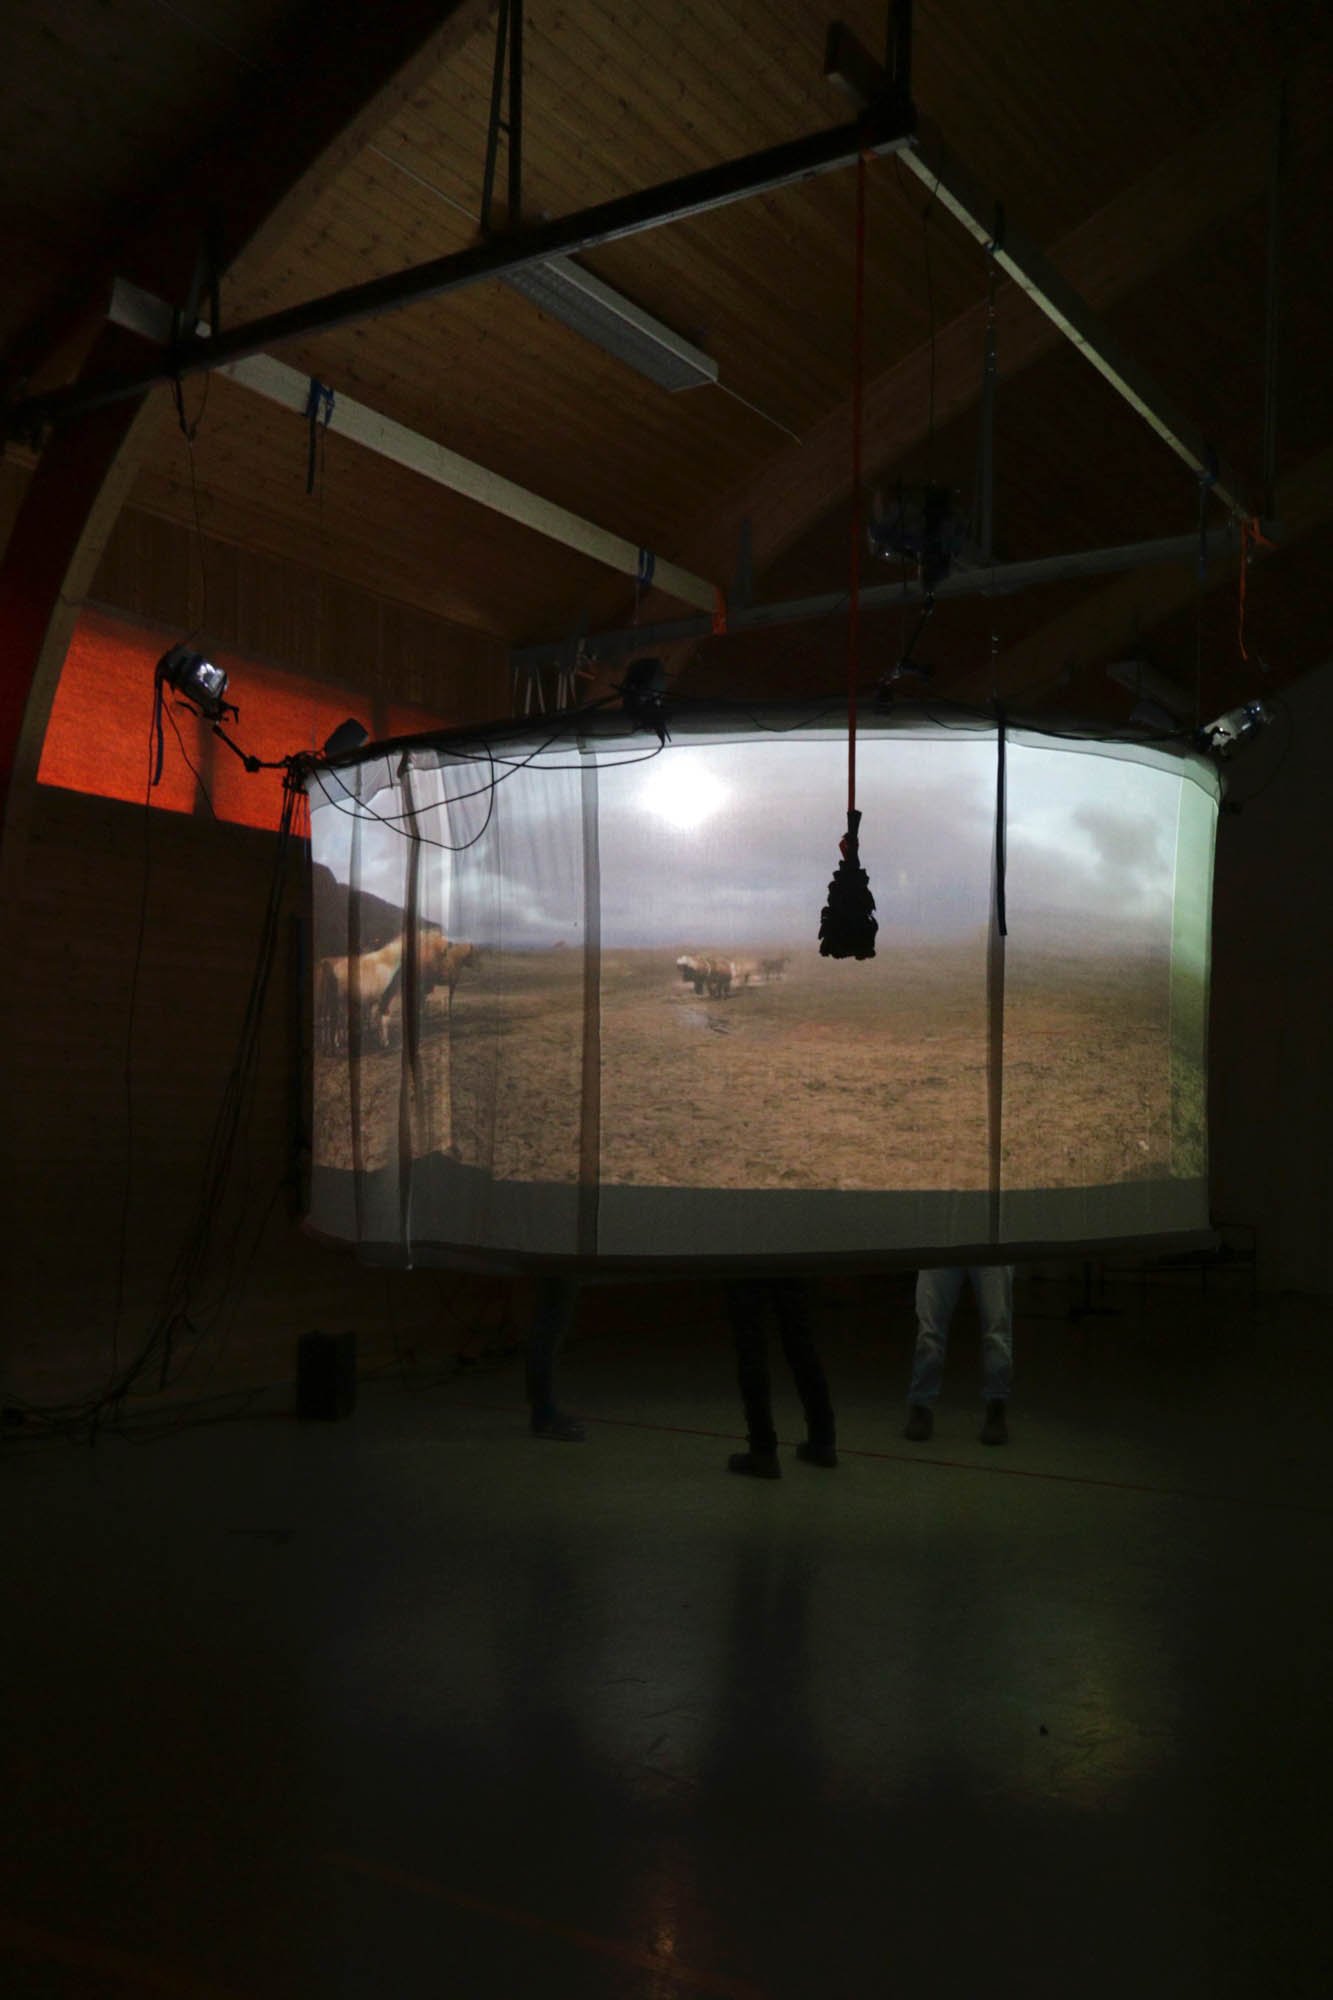   Uten tittel  by David Bohl Andersen og Sunniva Trømborg, 360 video (49 min), installation with 5.1. surround sound. Photo by NKFS.  